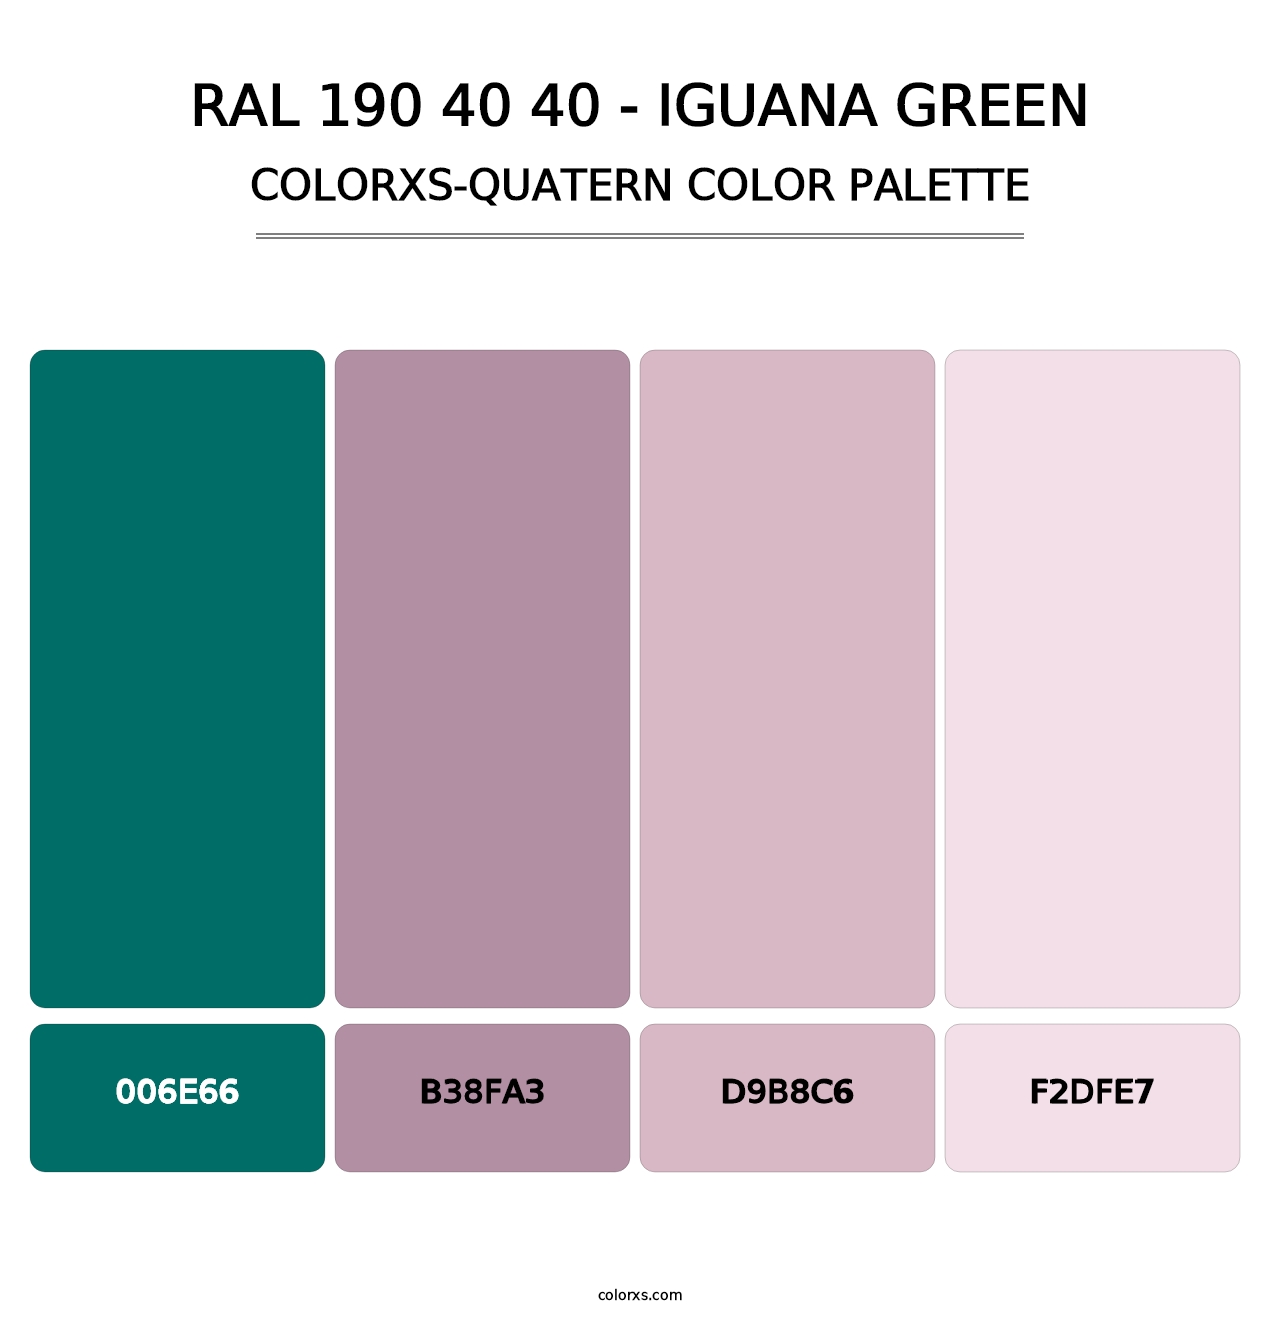 RAL 190 40 40 - Iguana Green - Colorxs Quatern Palette